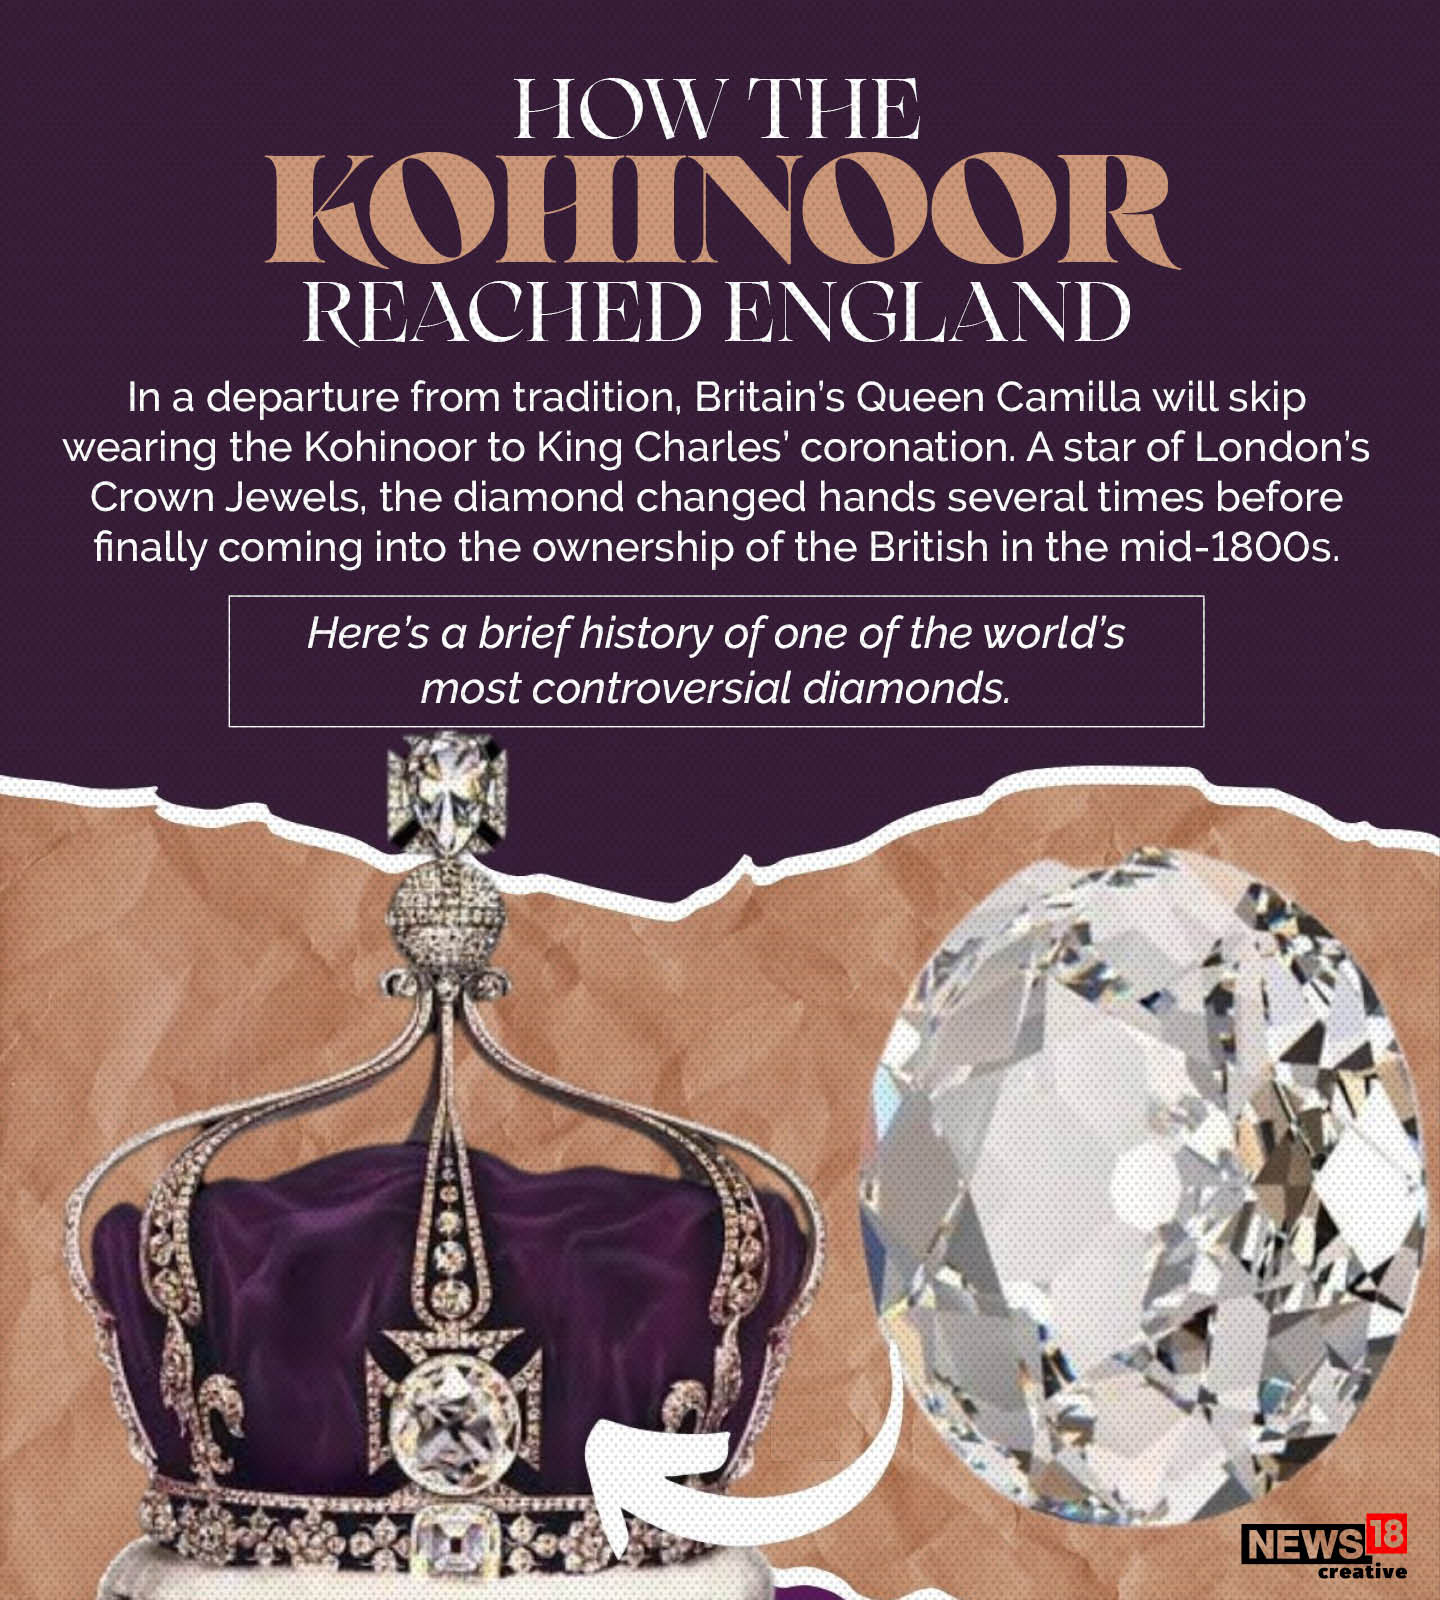 The Kohinoor Diamond and How to Get it Back, by Edward Kitlertsirivatana